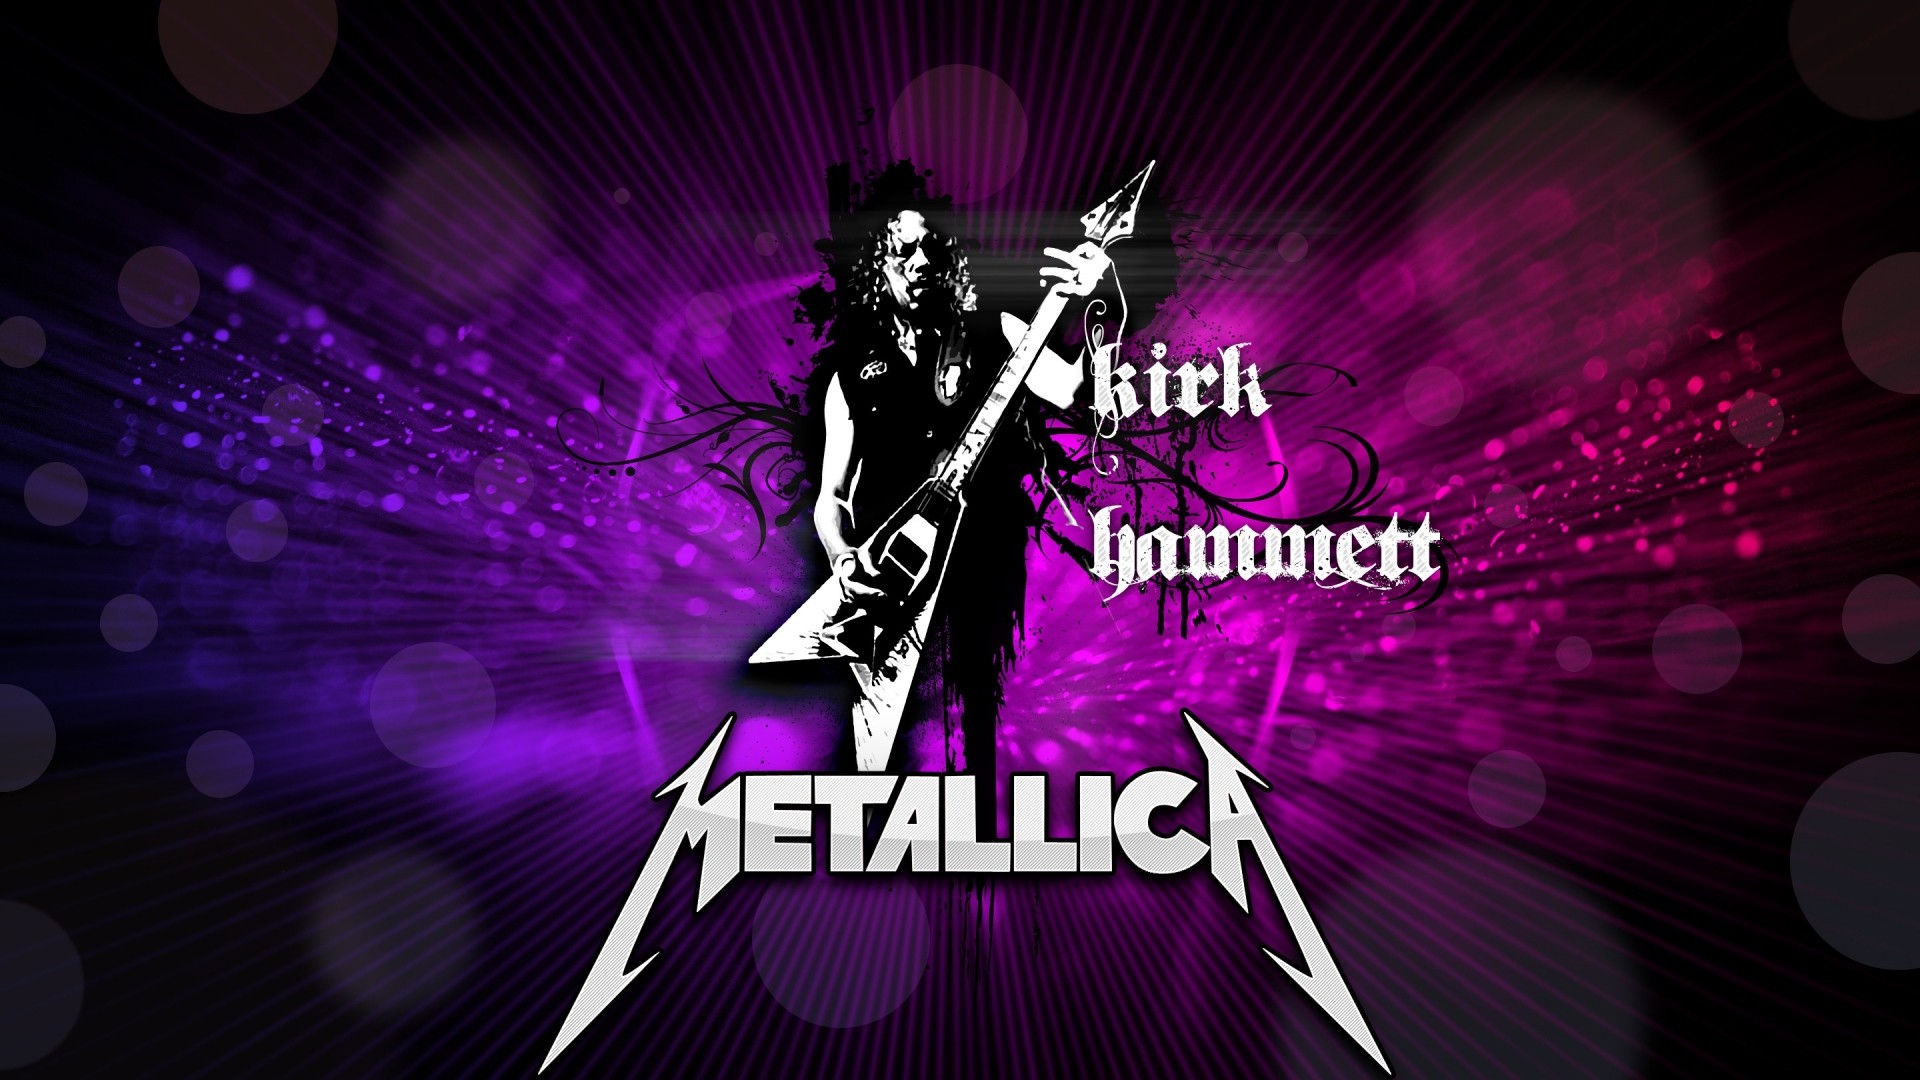 Metallica Hd Background Http Wallpapers And Backgrounds Net Metallica 1920x1080